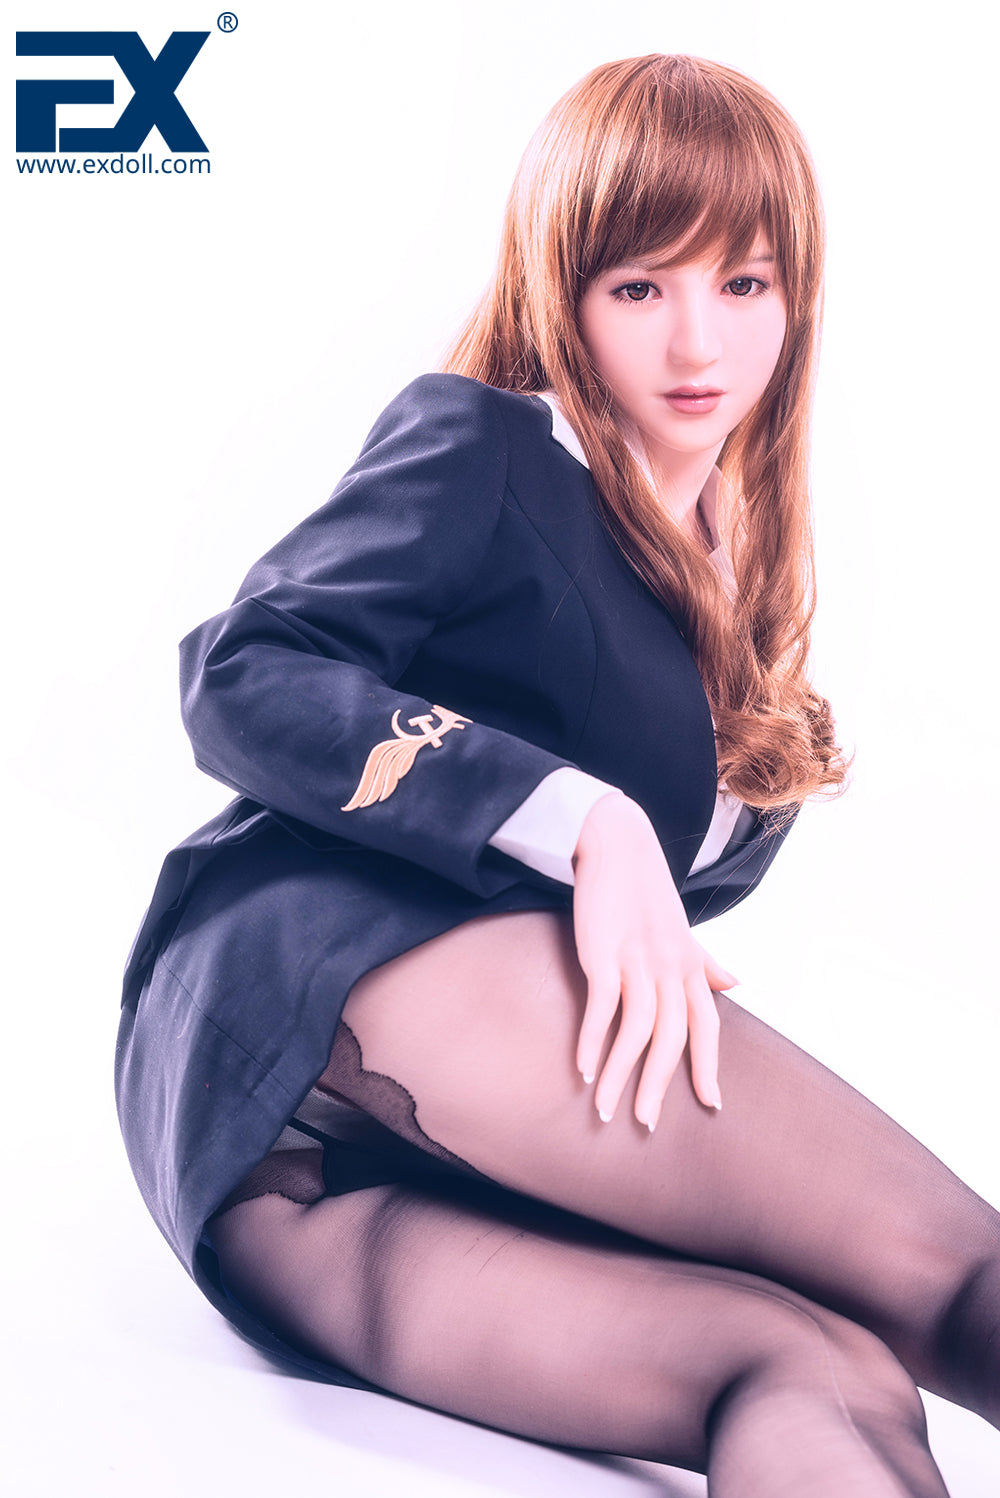 EX Doll Ukiyoe Series 170 cm Silicone - Yuan Yuan | Buy Sex Dolls at DOLLS ACTUALLY